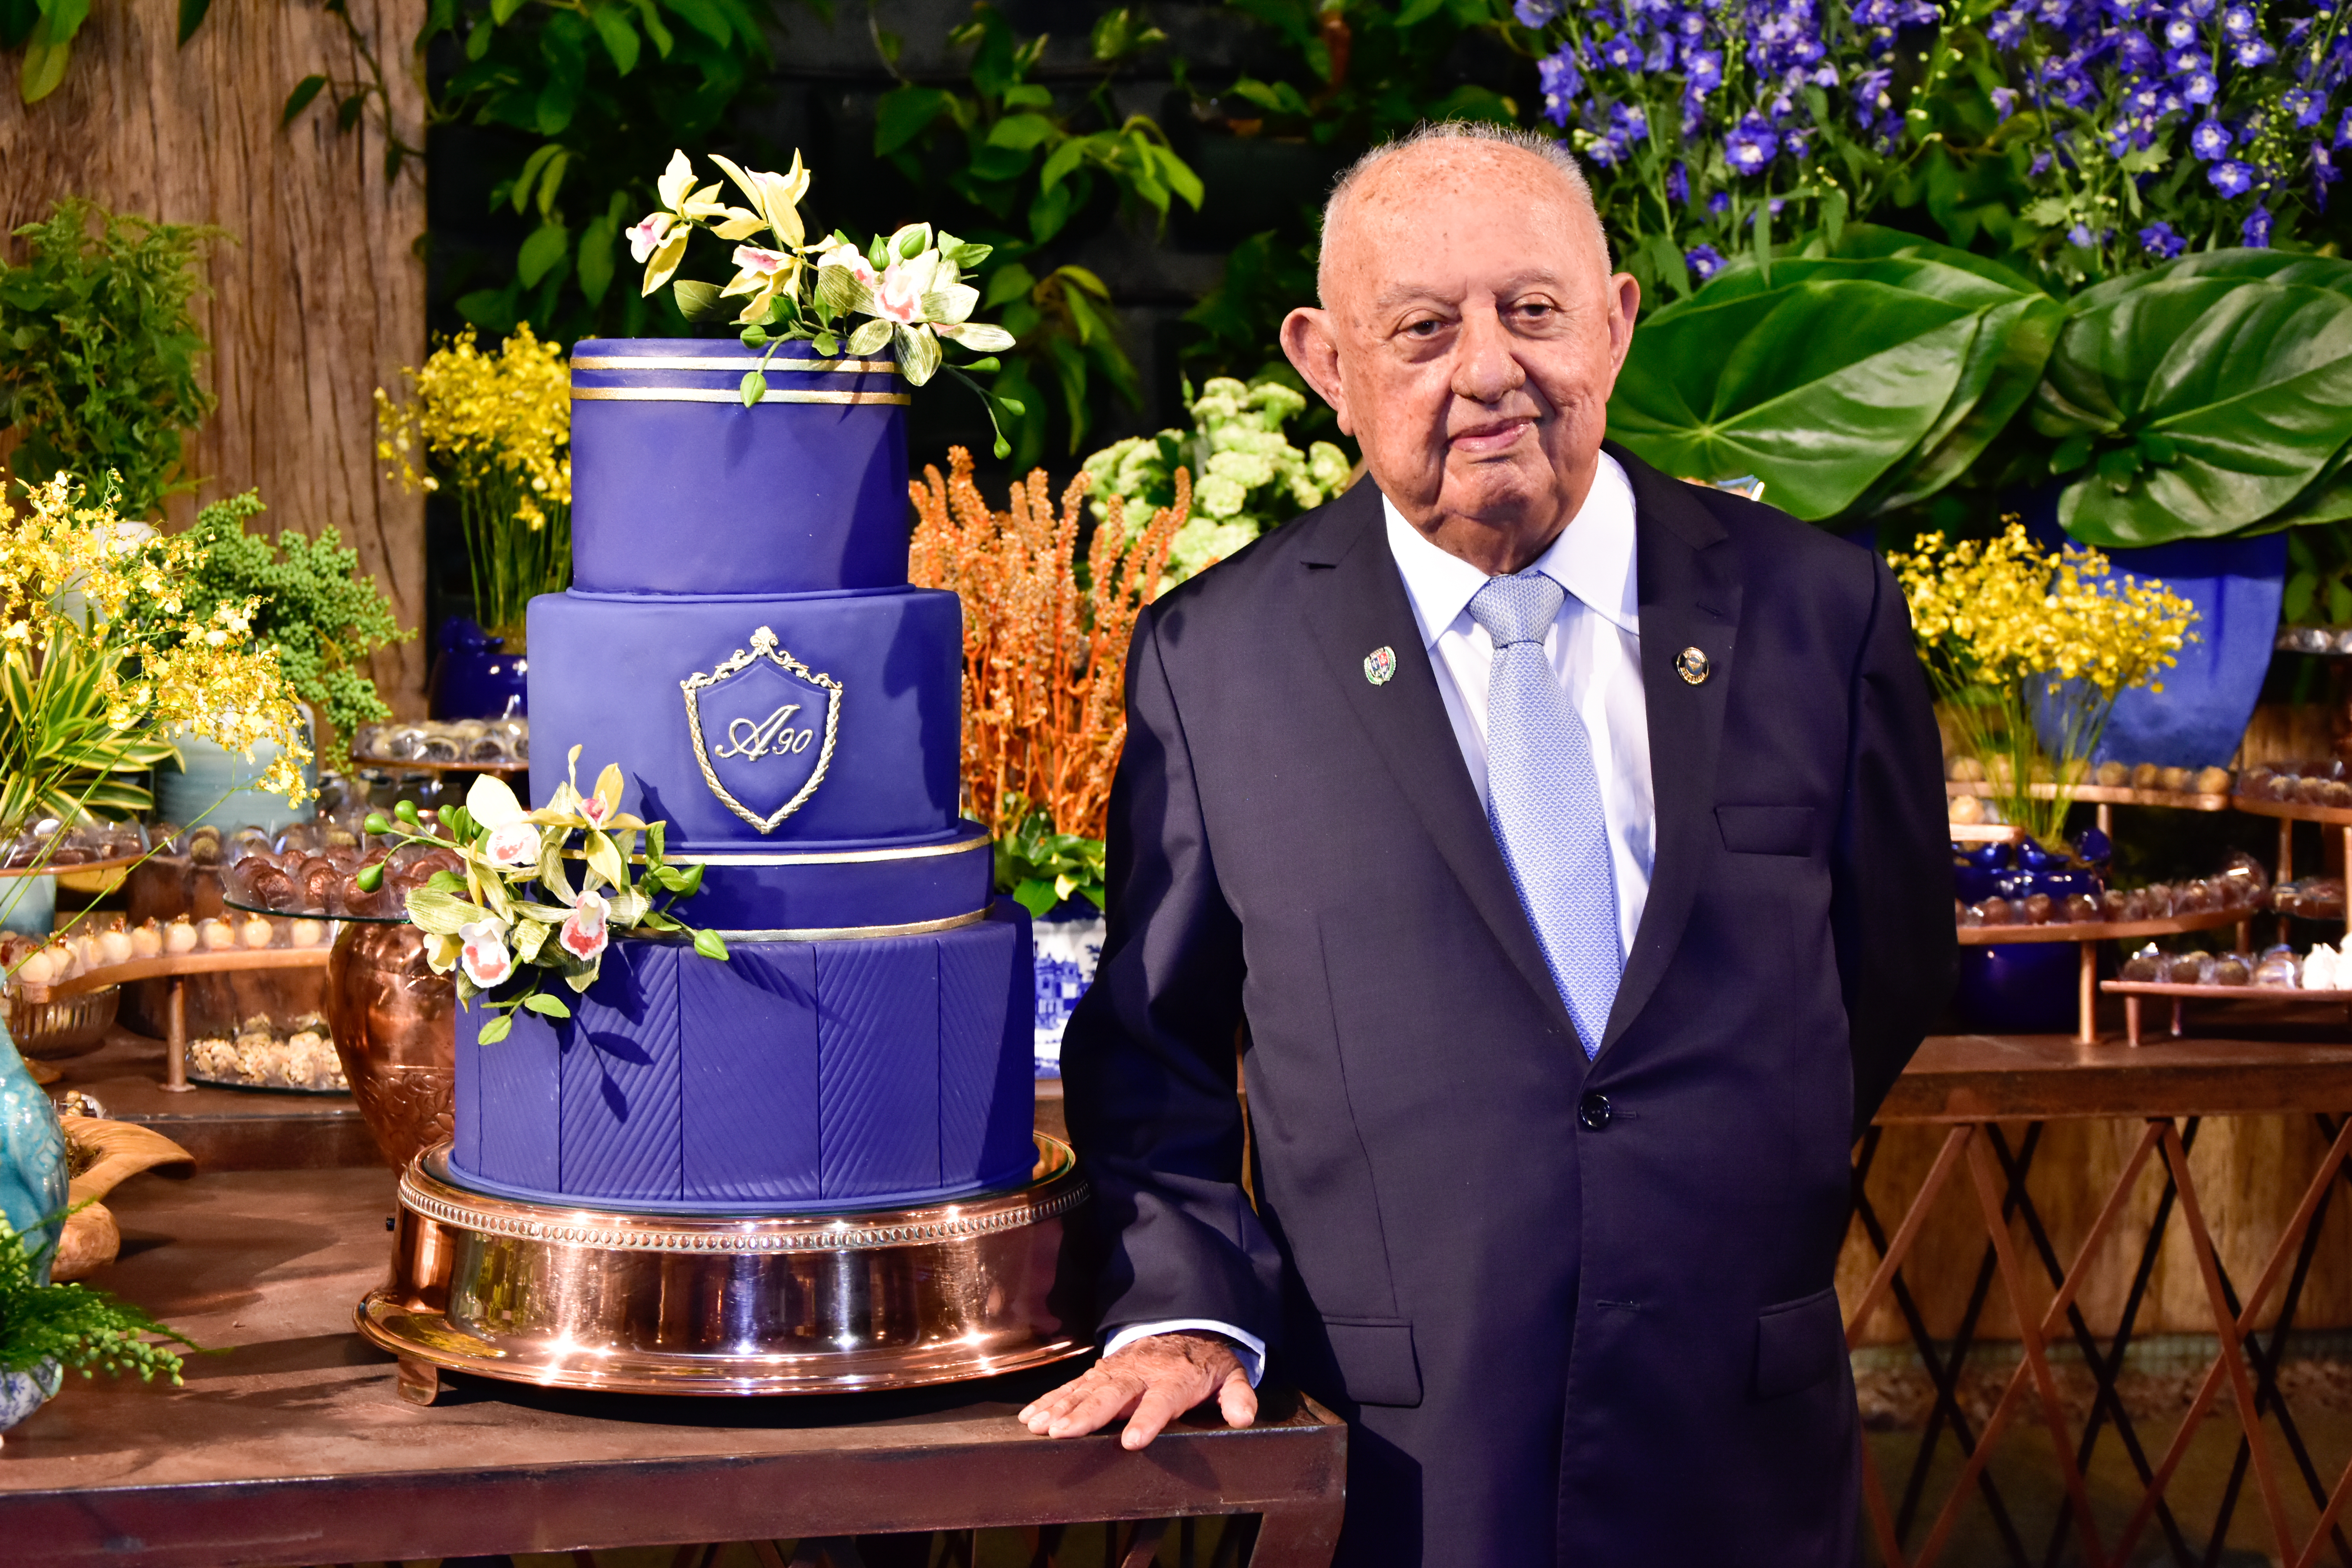 Coronel Austregésilo comemora aniversário de 90 anos rodeado de amigos e família